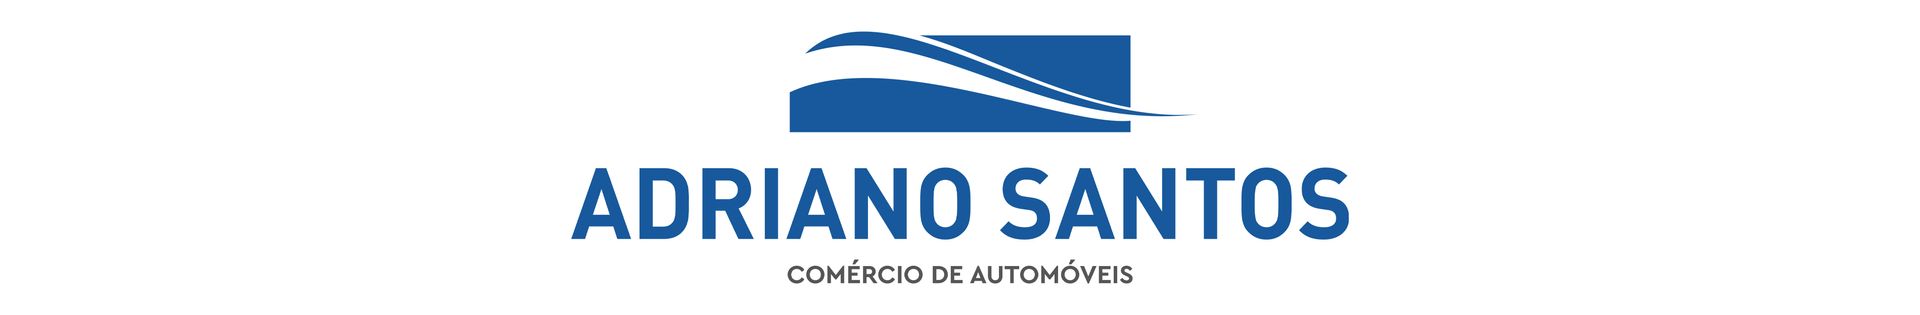 Adriano Santos Automóveis top banner